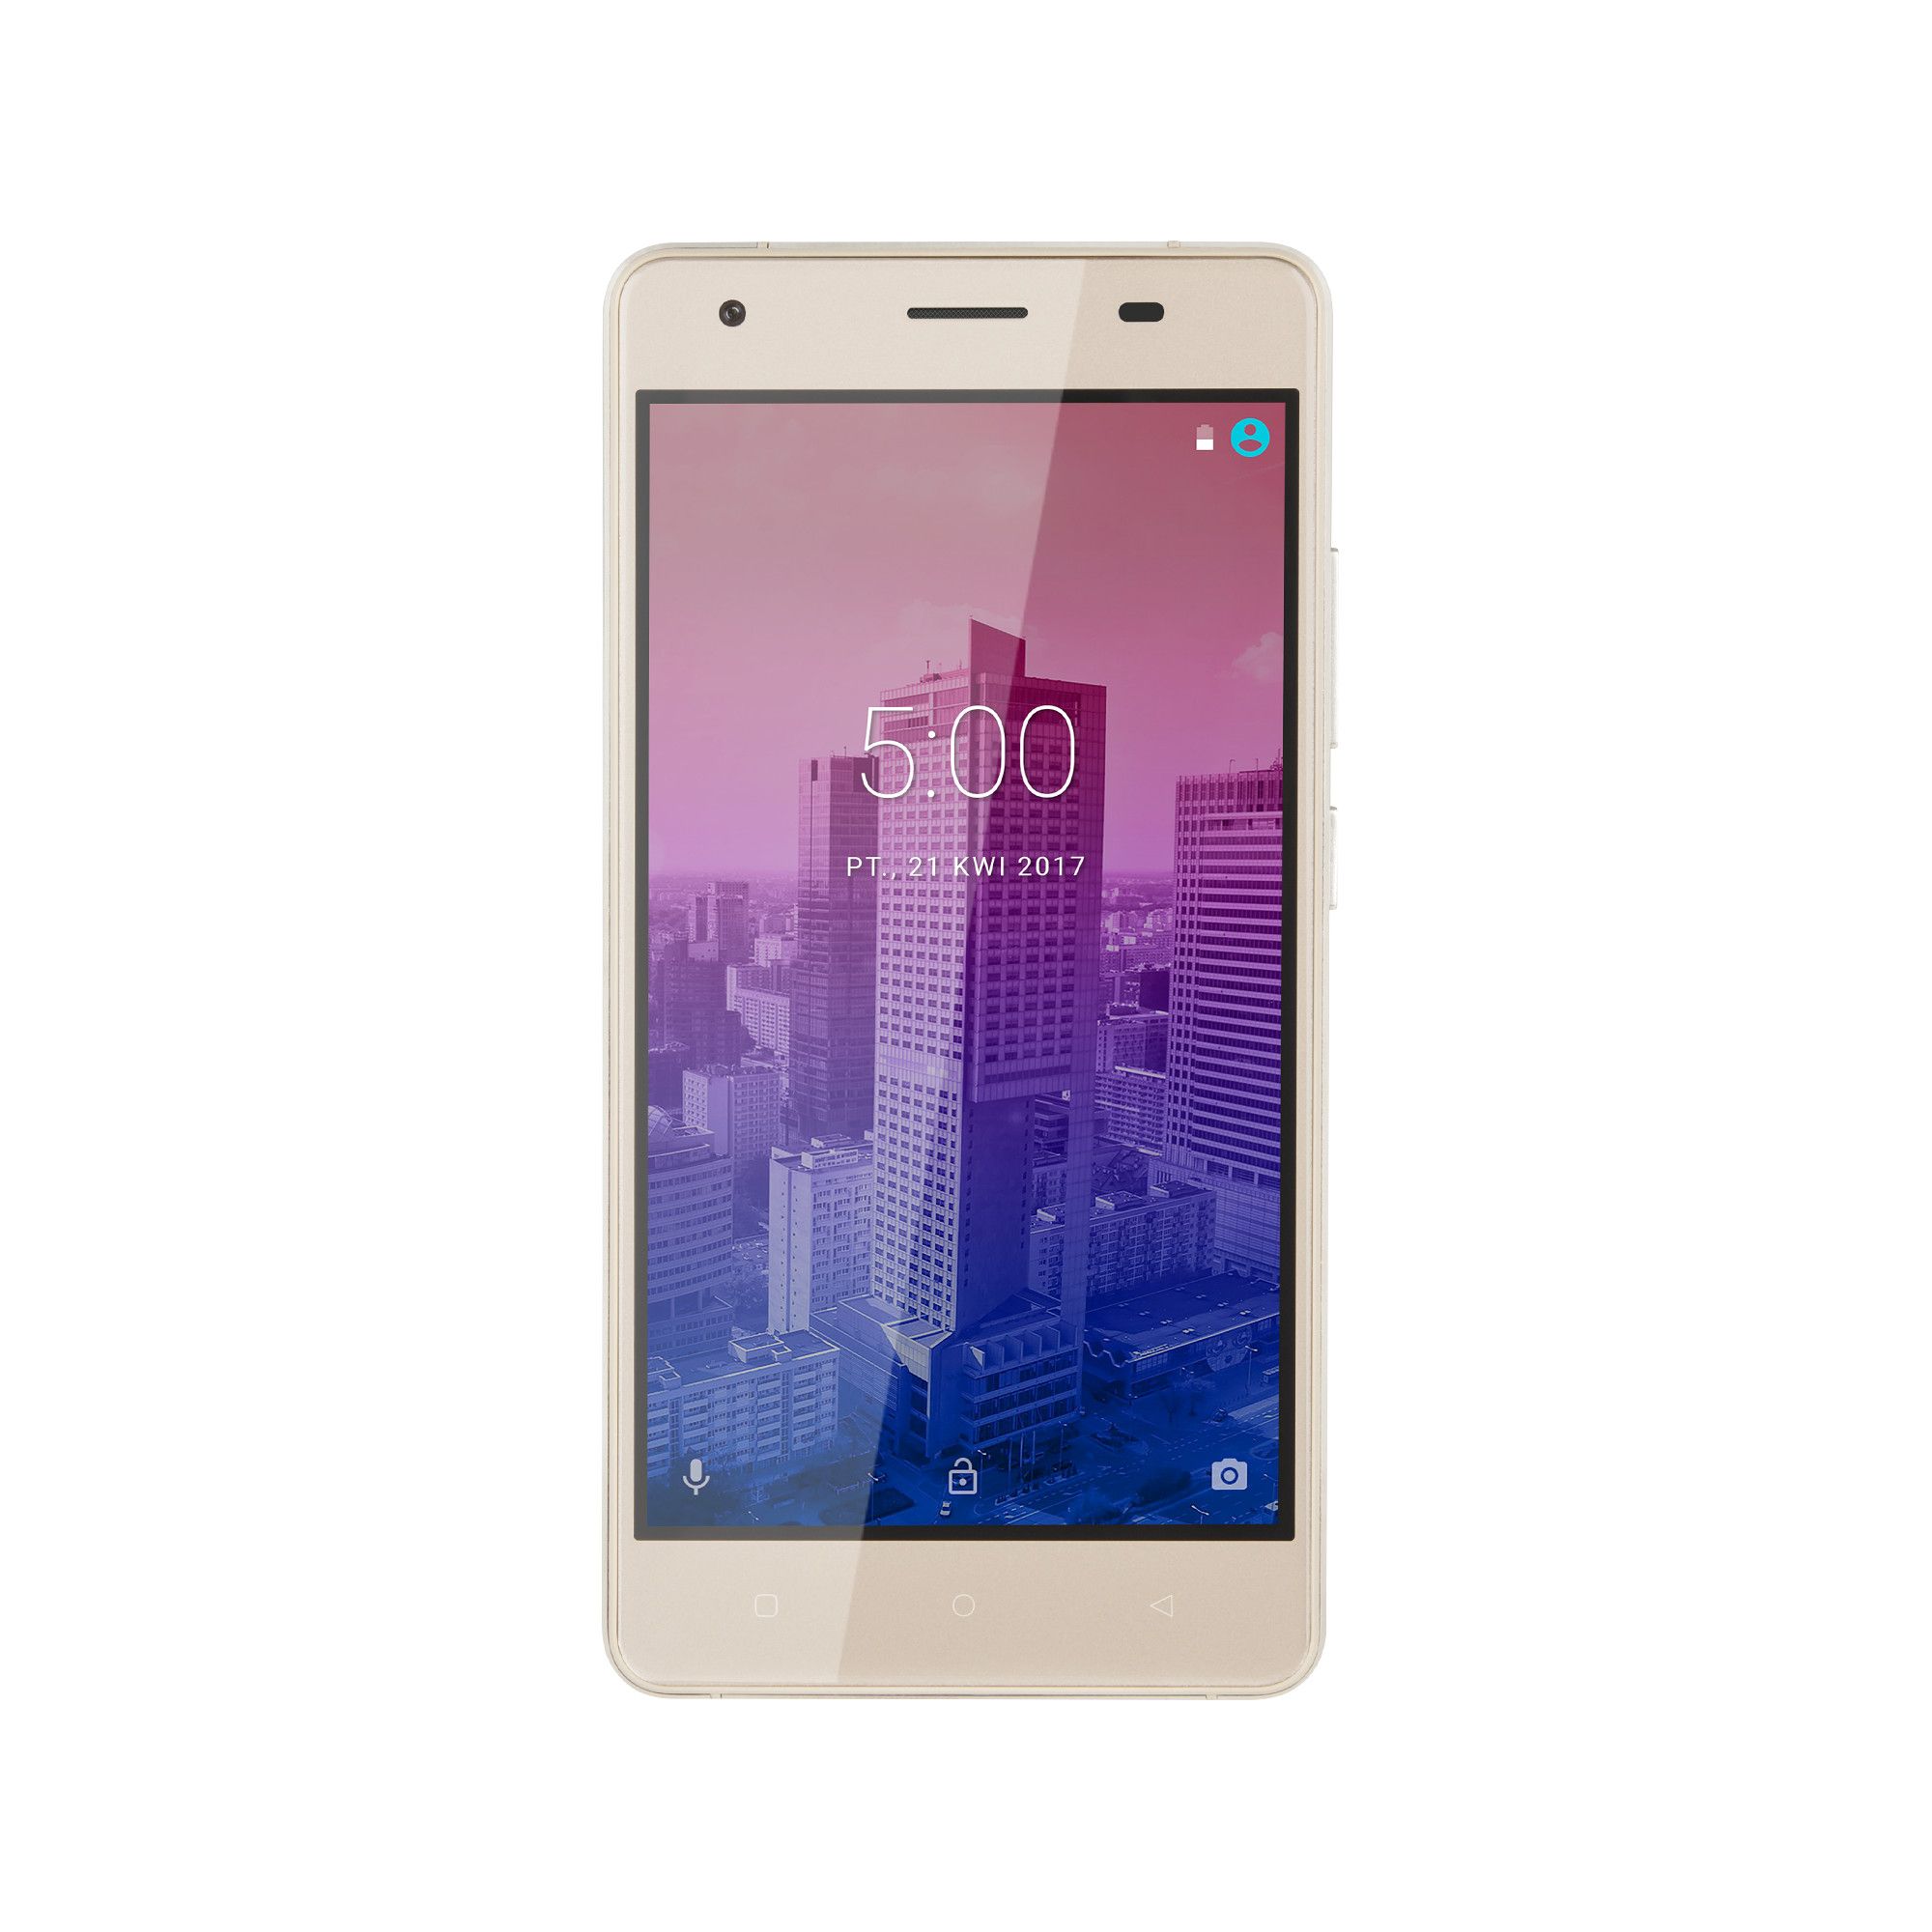 Telefon mobil kruger&matz, android 7.0, diagonala 5 inch, rezolutie 720 x 1280 px, senzor de amprenta, dual sim, design ergonomic, culoare gold